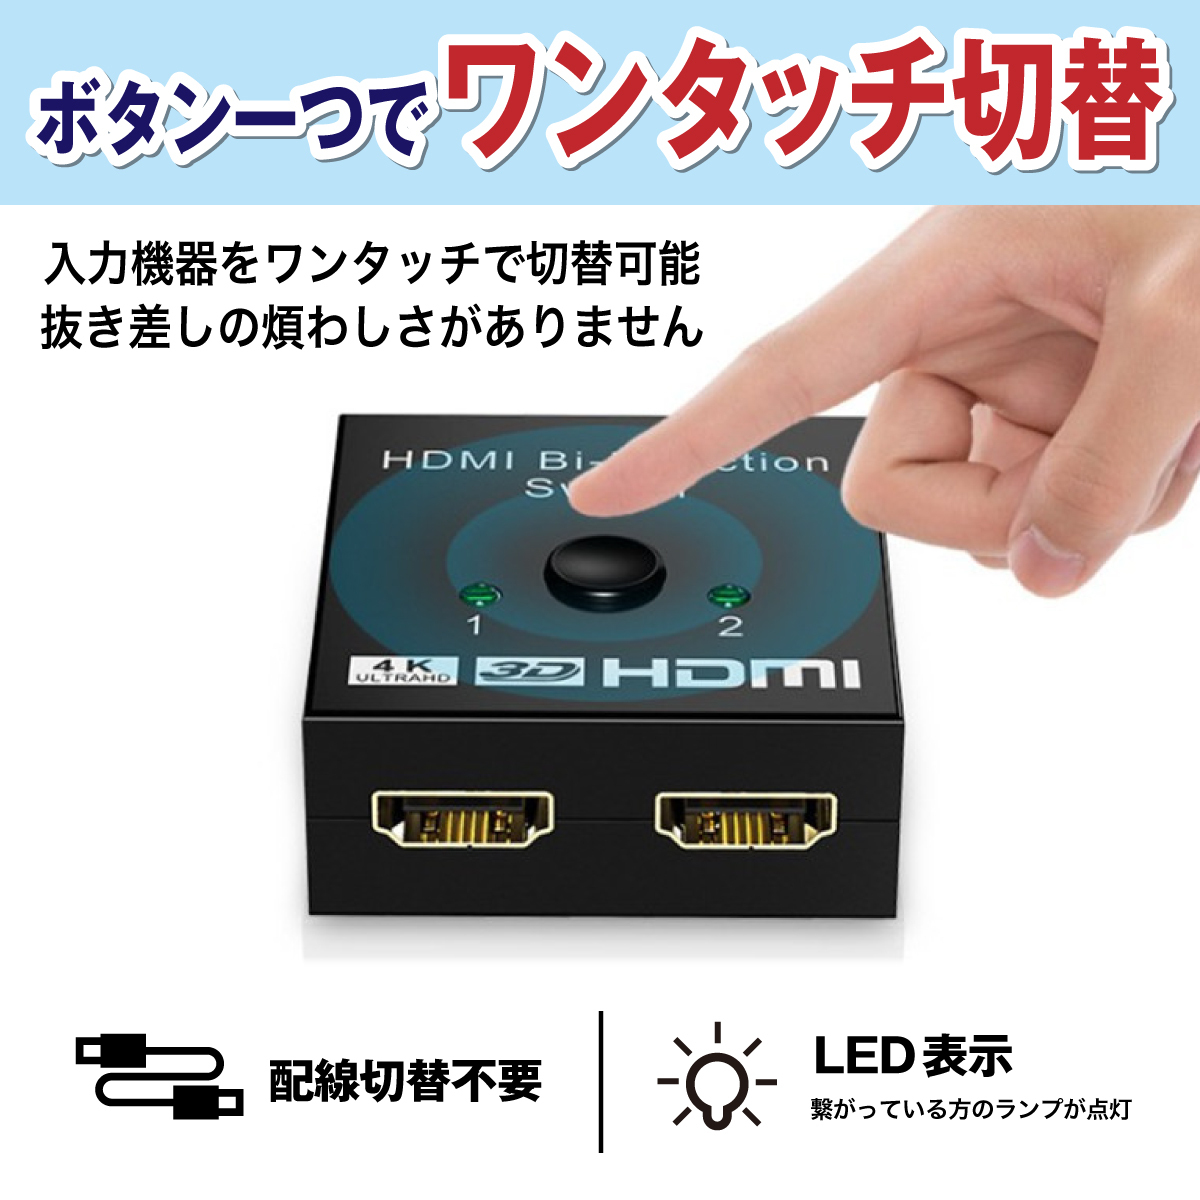 HDMI переключатель дистрибьютор селектор сплиттер переключатель .- переключатель монитор 4K 3D